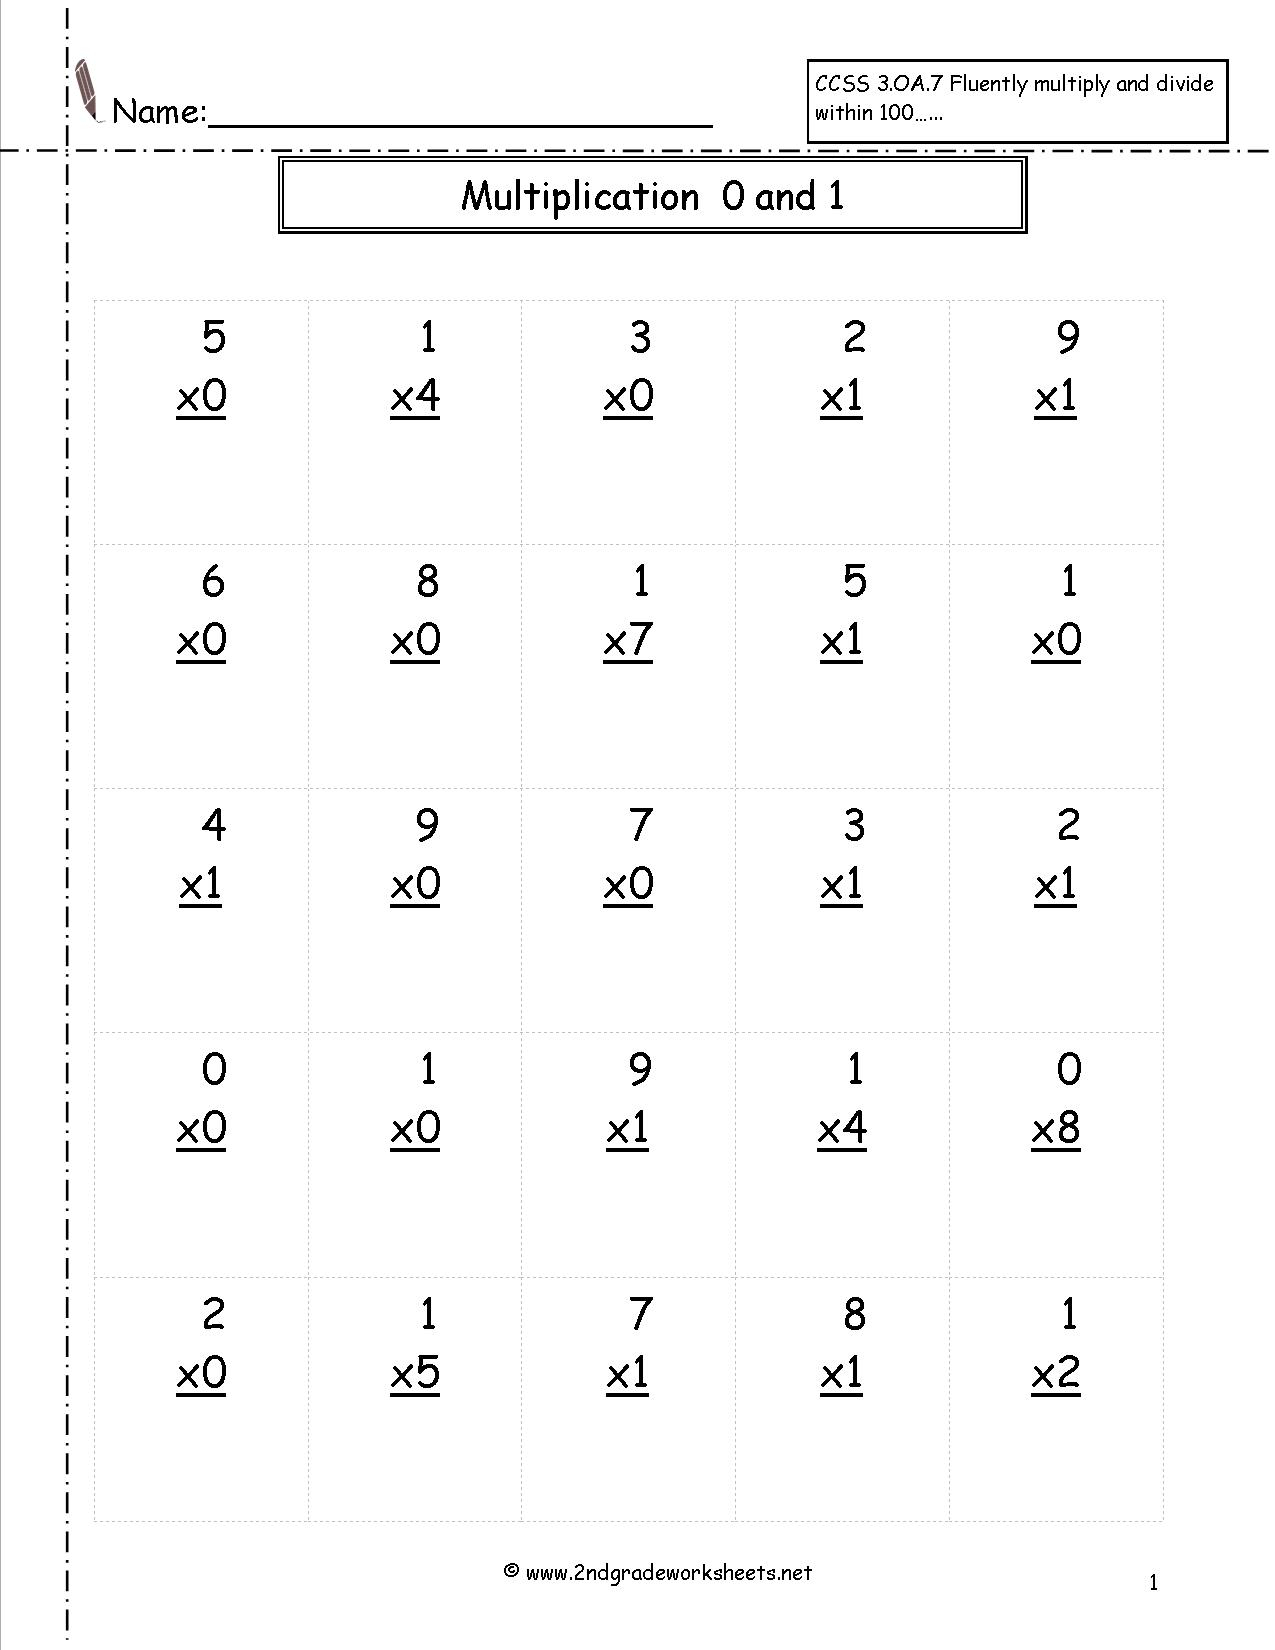 printable-multiplication-test-printable-multiplication-flash-cards